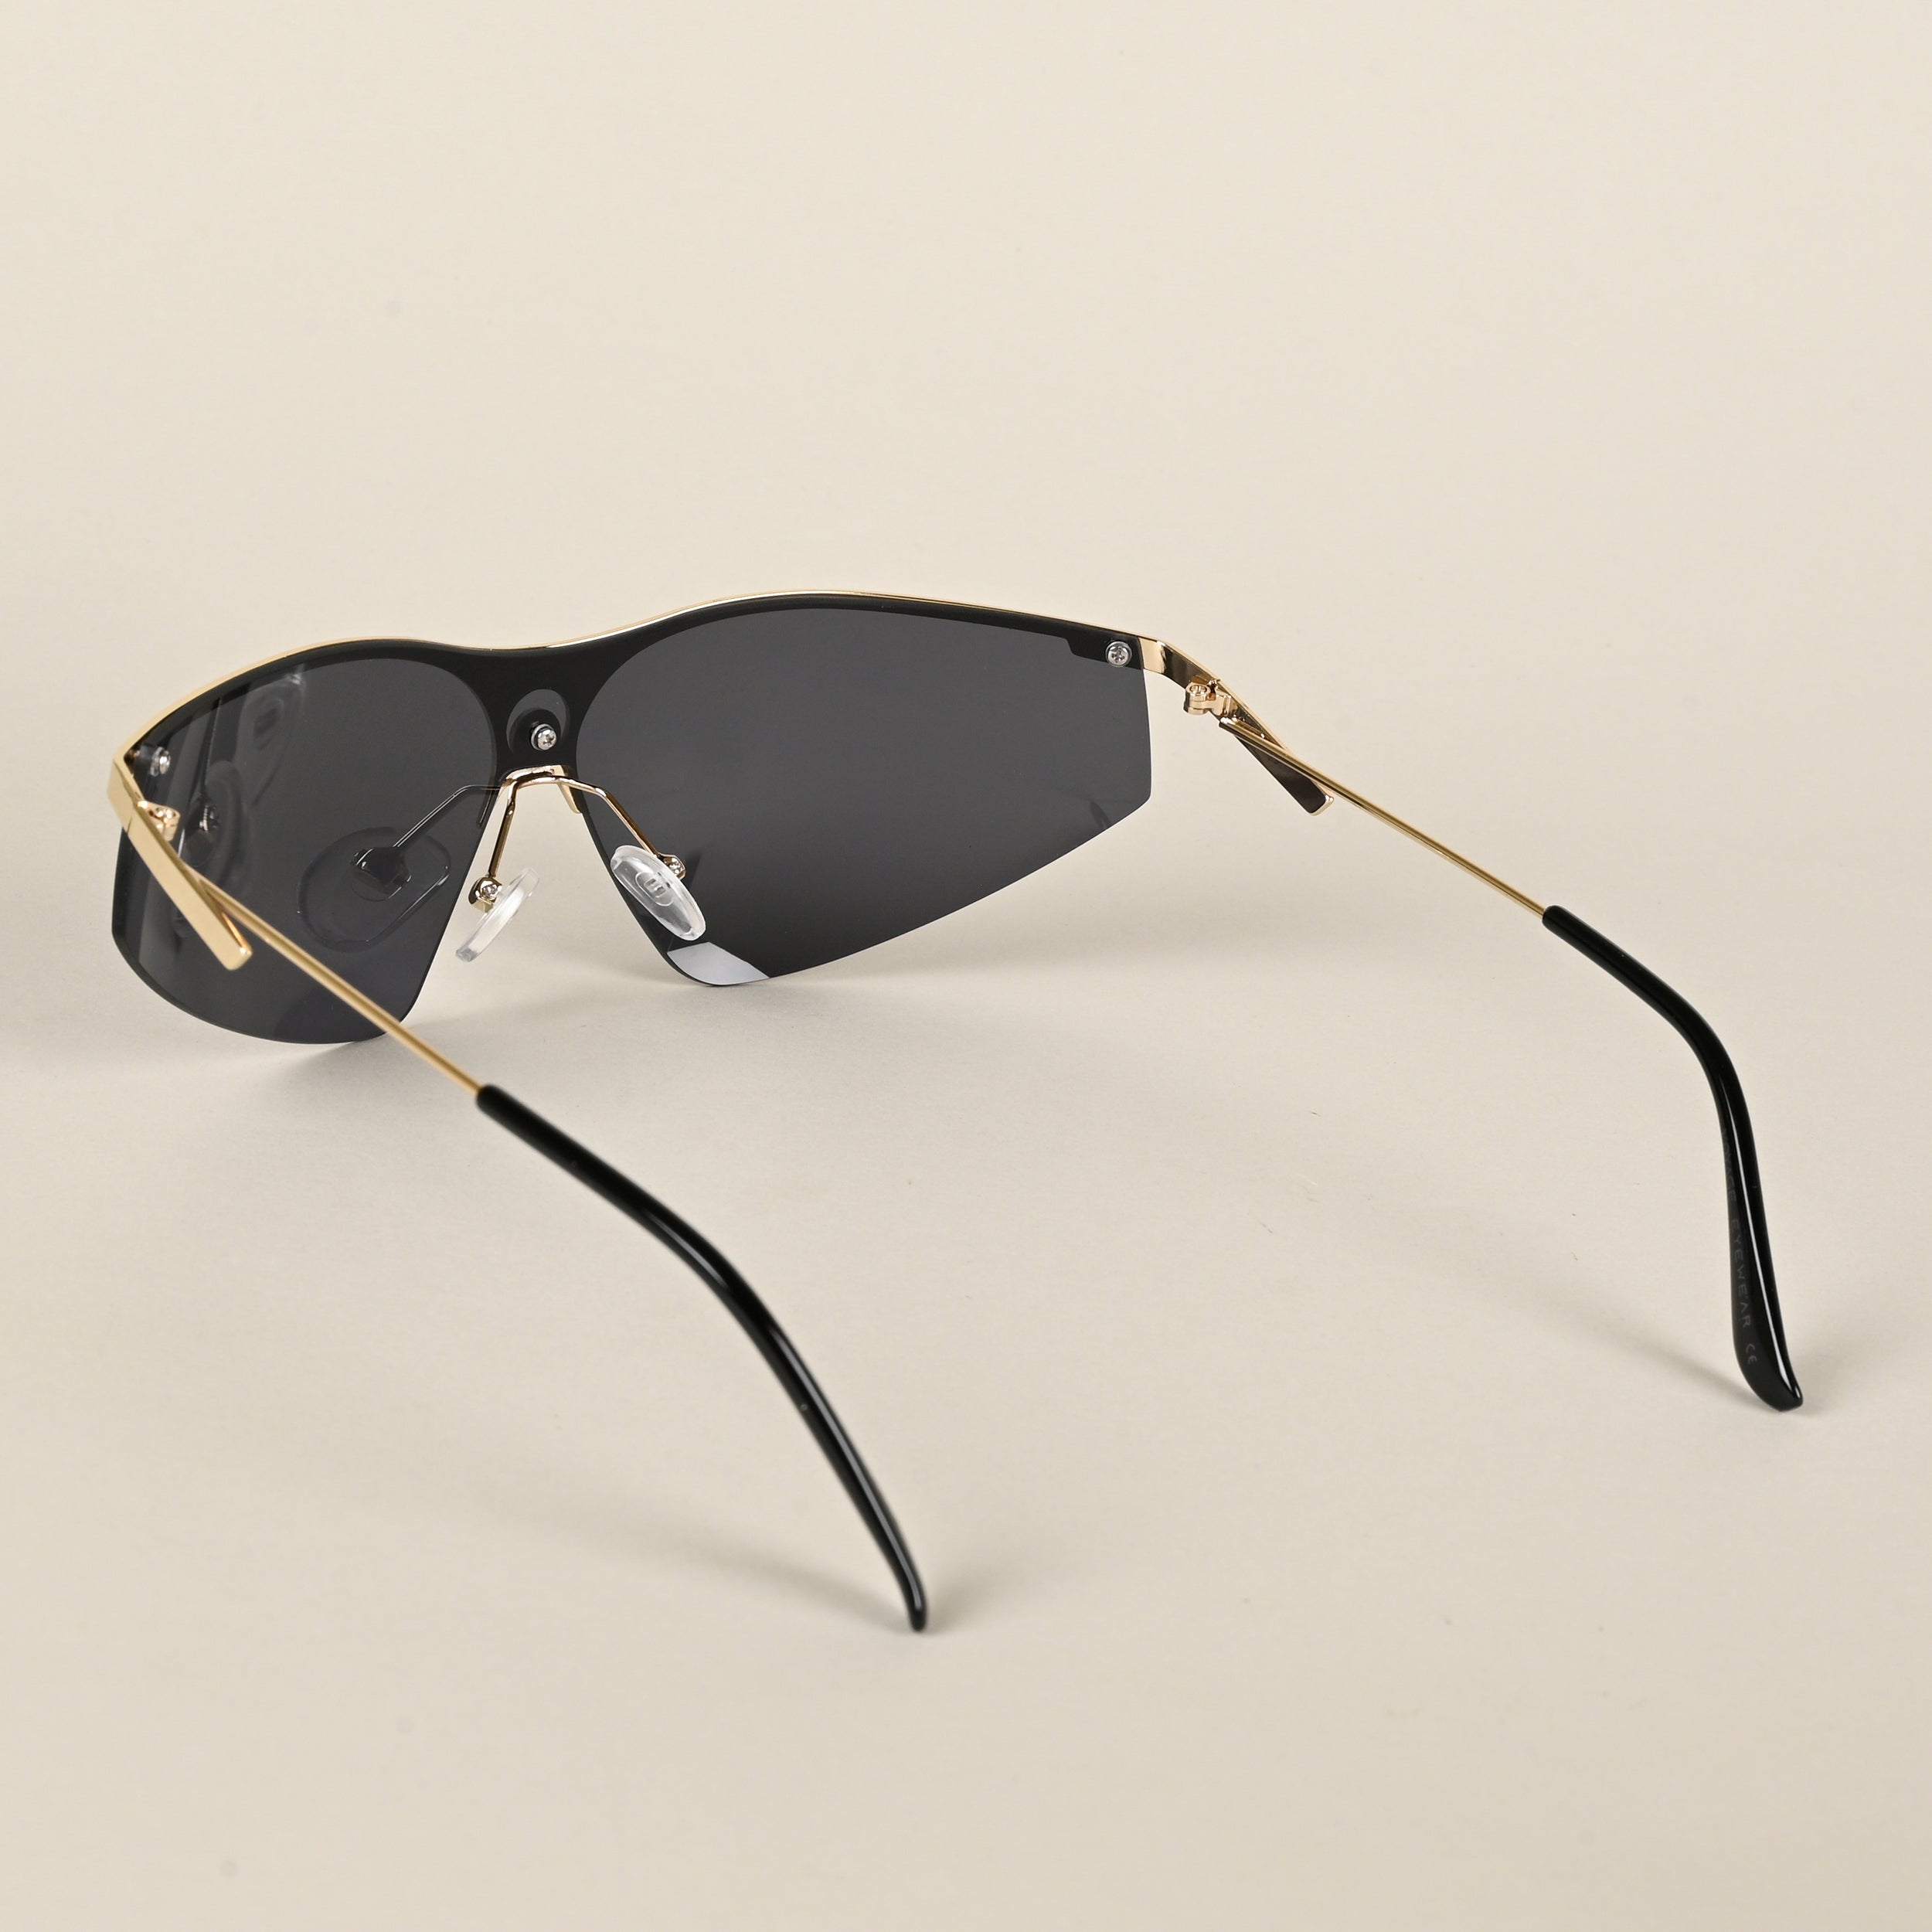 Voyage Black Wrap-Around Sunglasses for Men & Women - MG4219